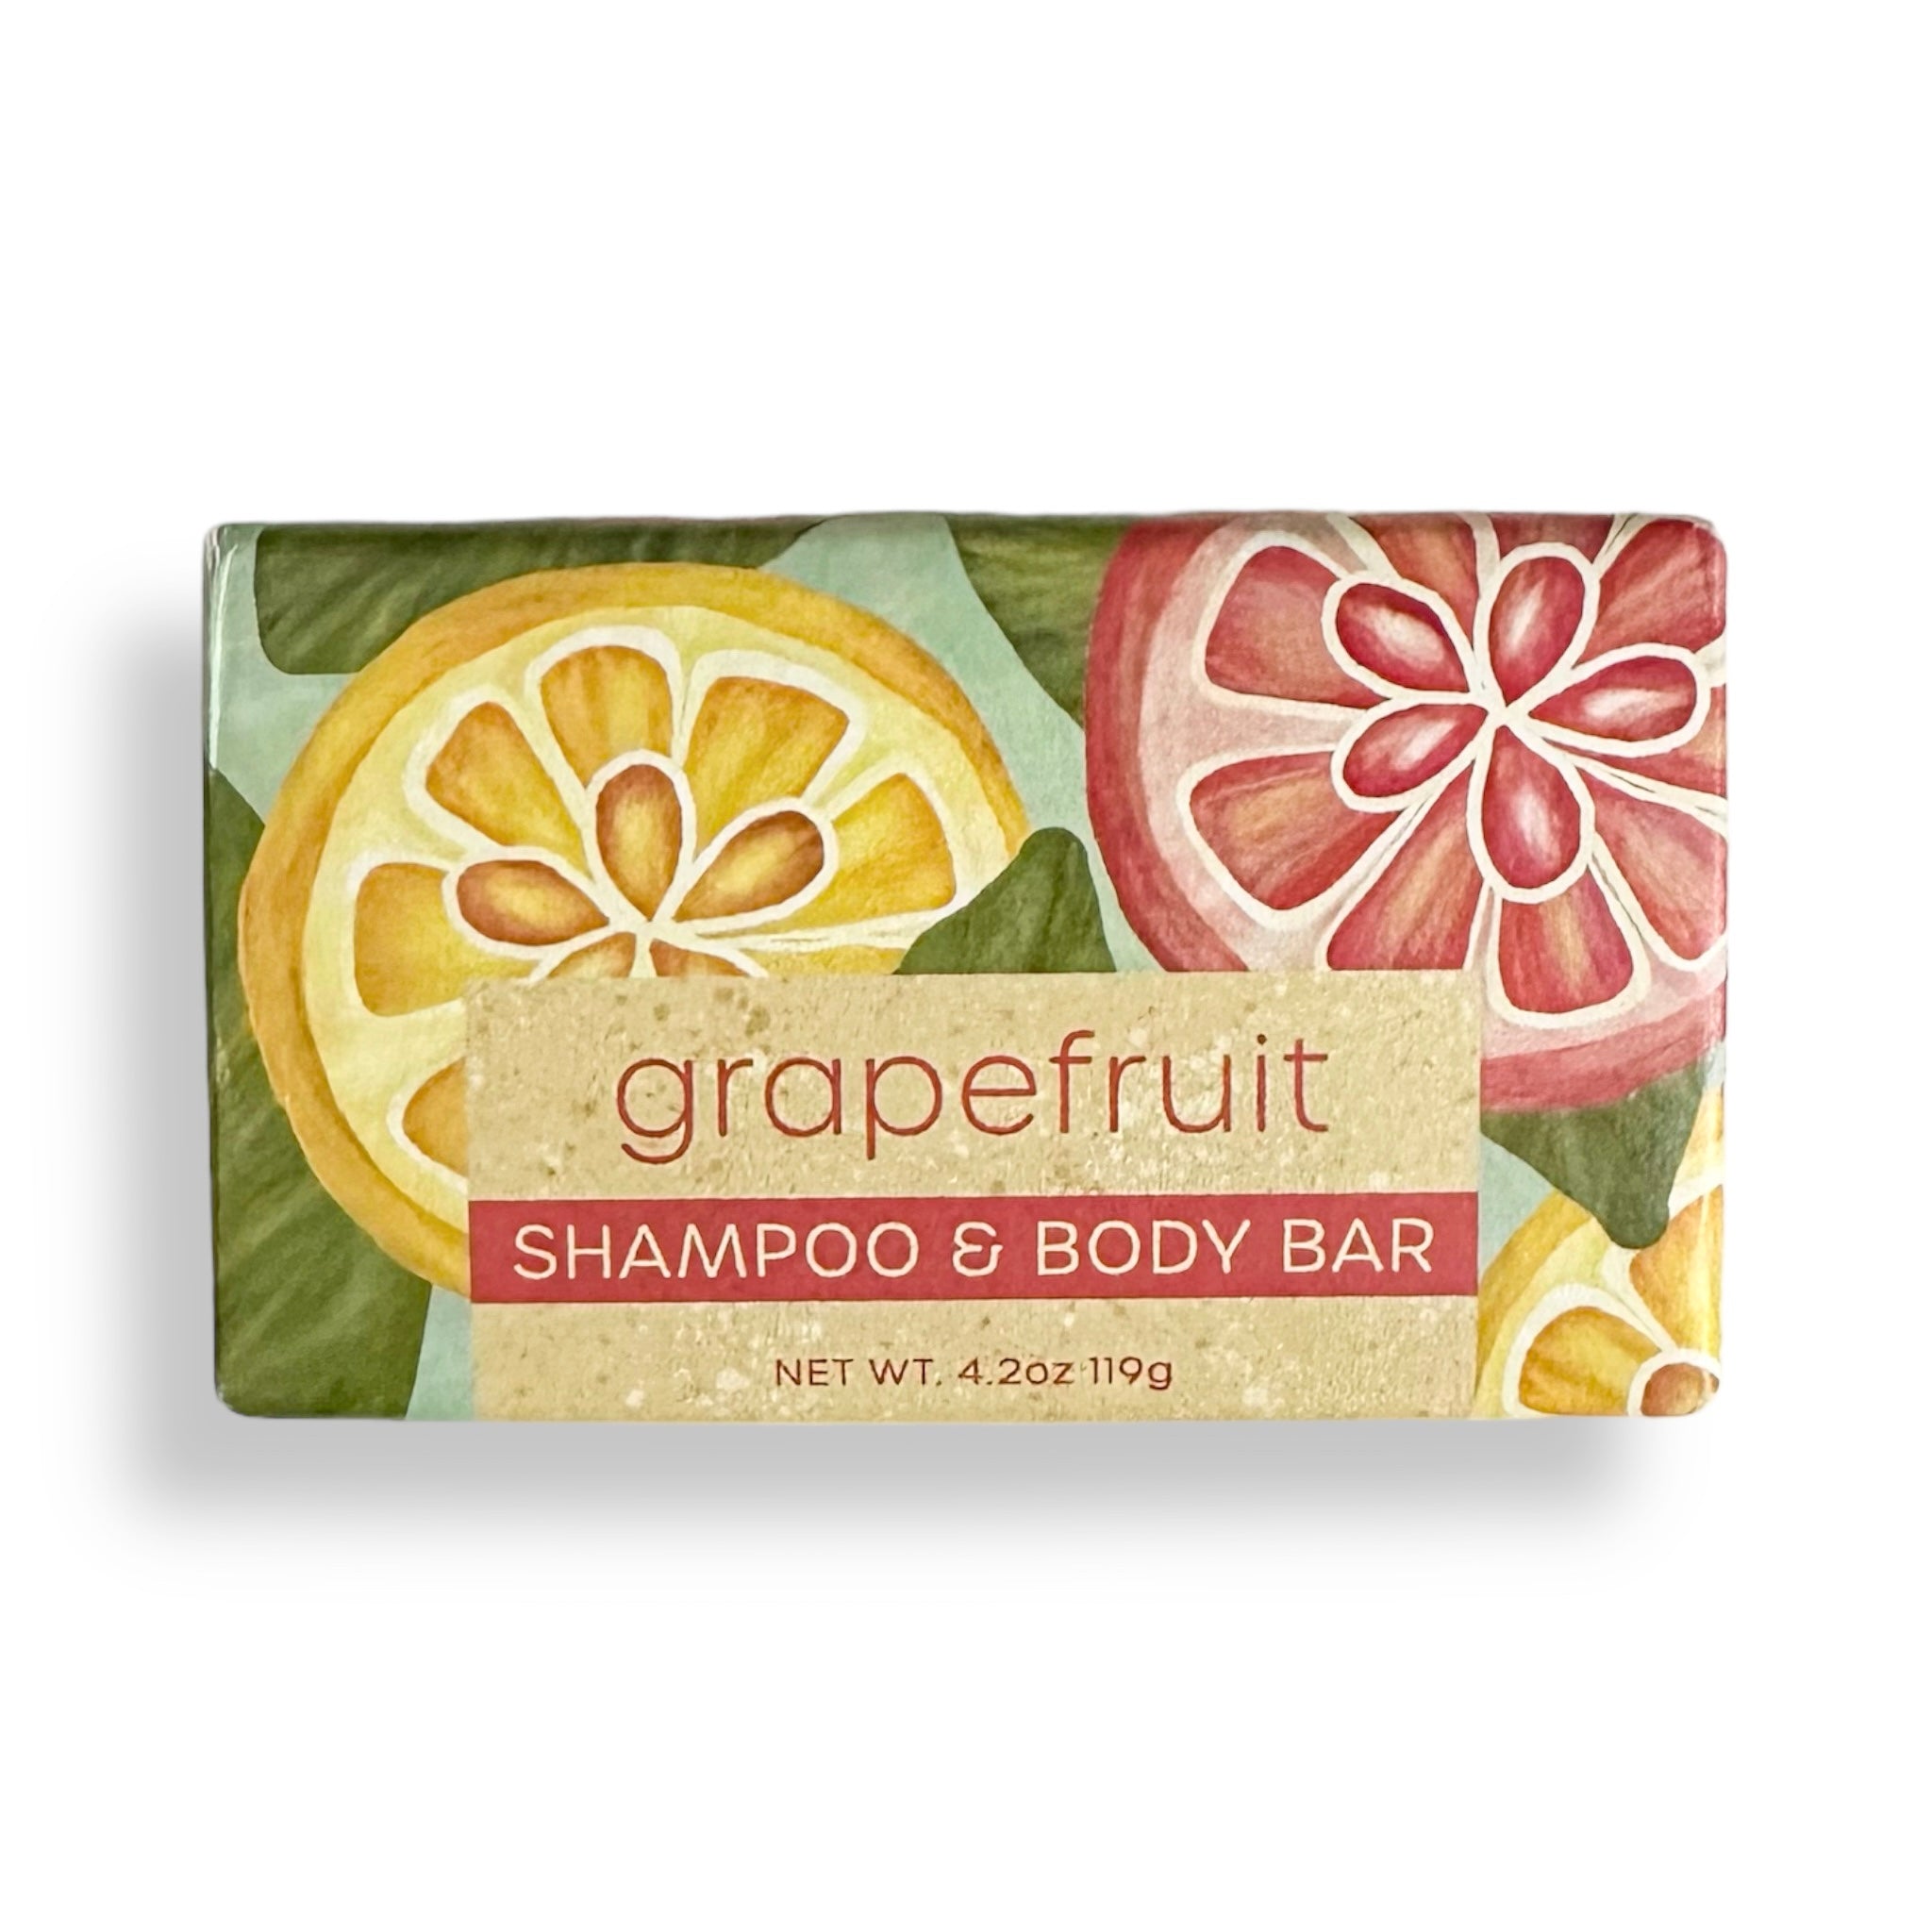 Greenwich Bay Trading Co Grapefruit shampoo & body bar MerryBath.com